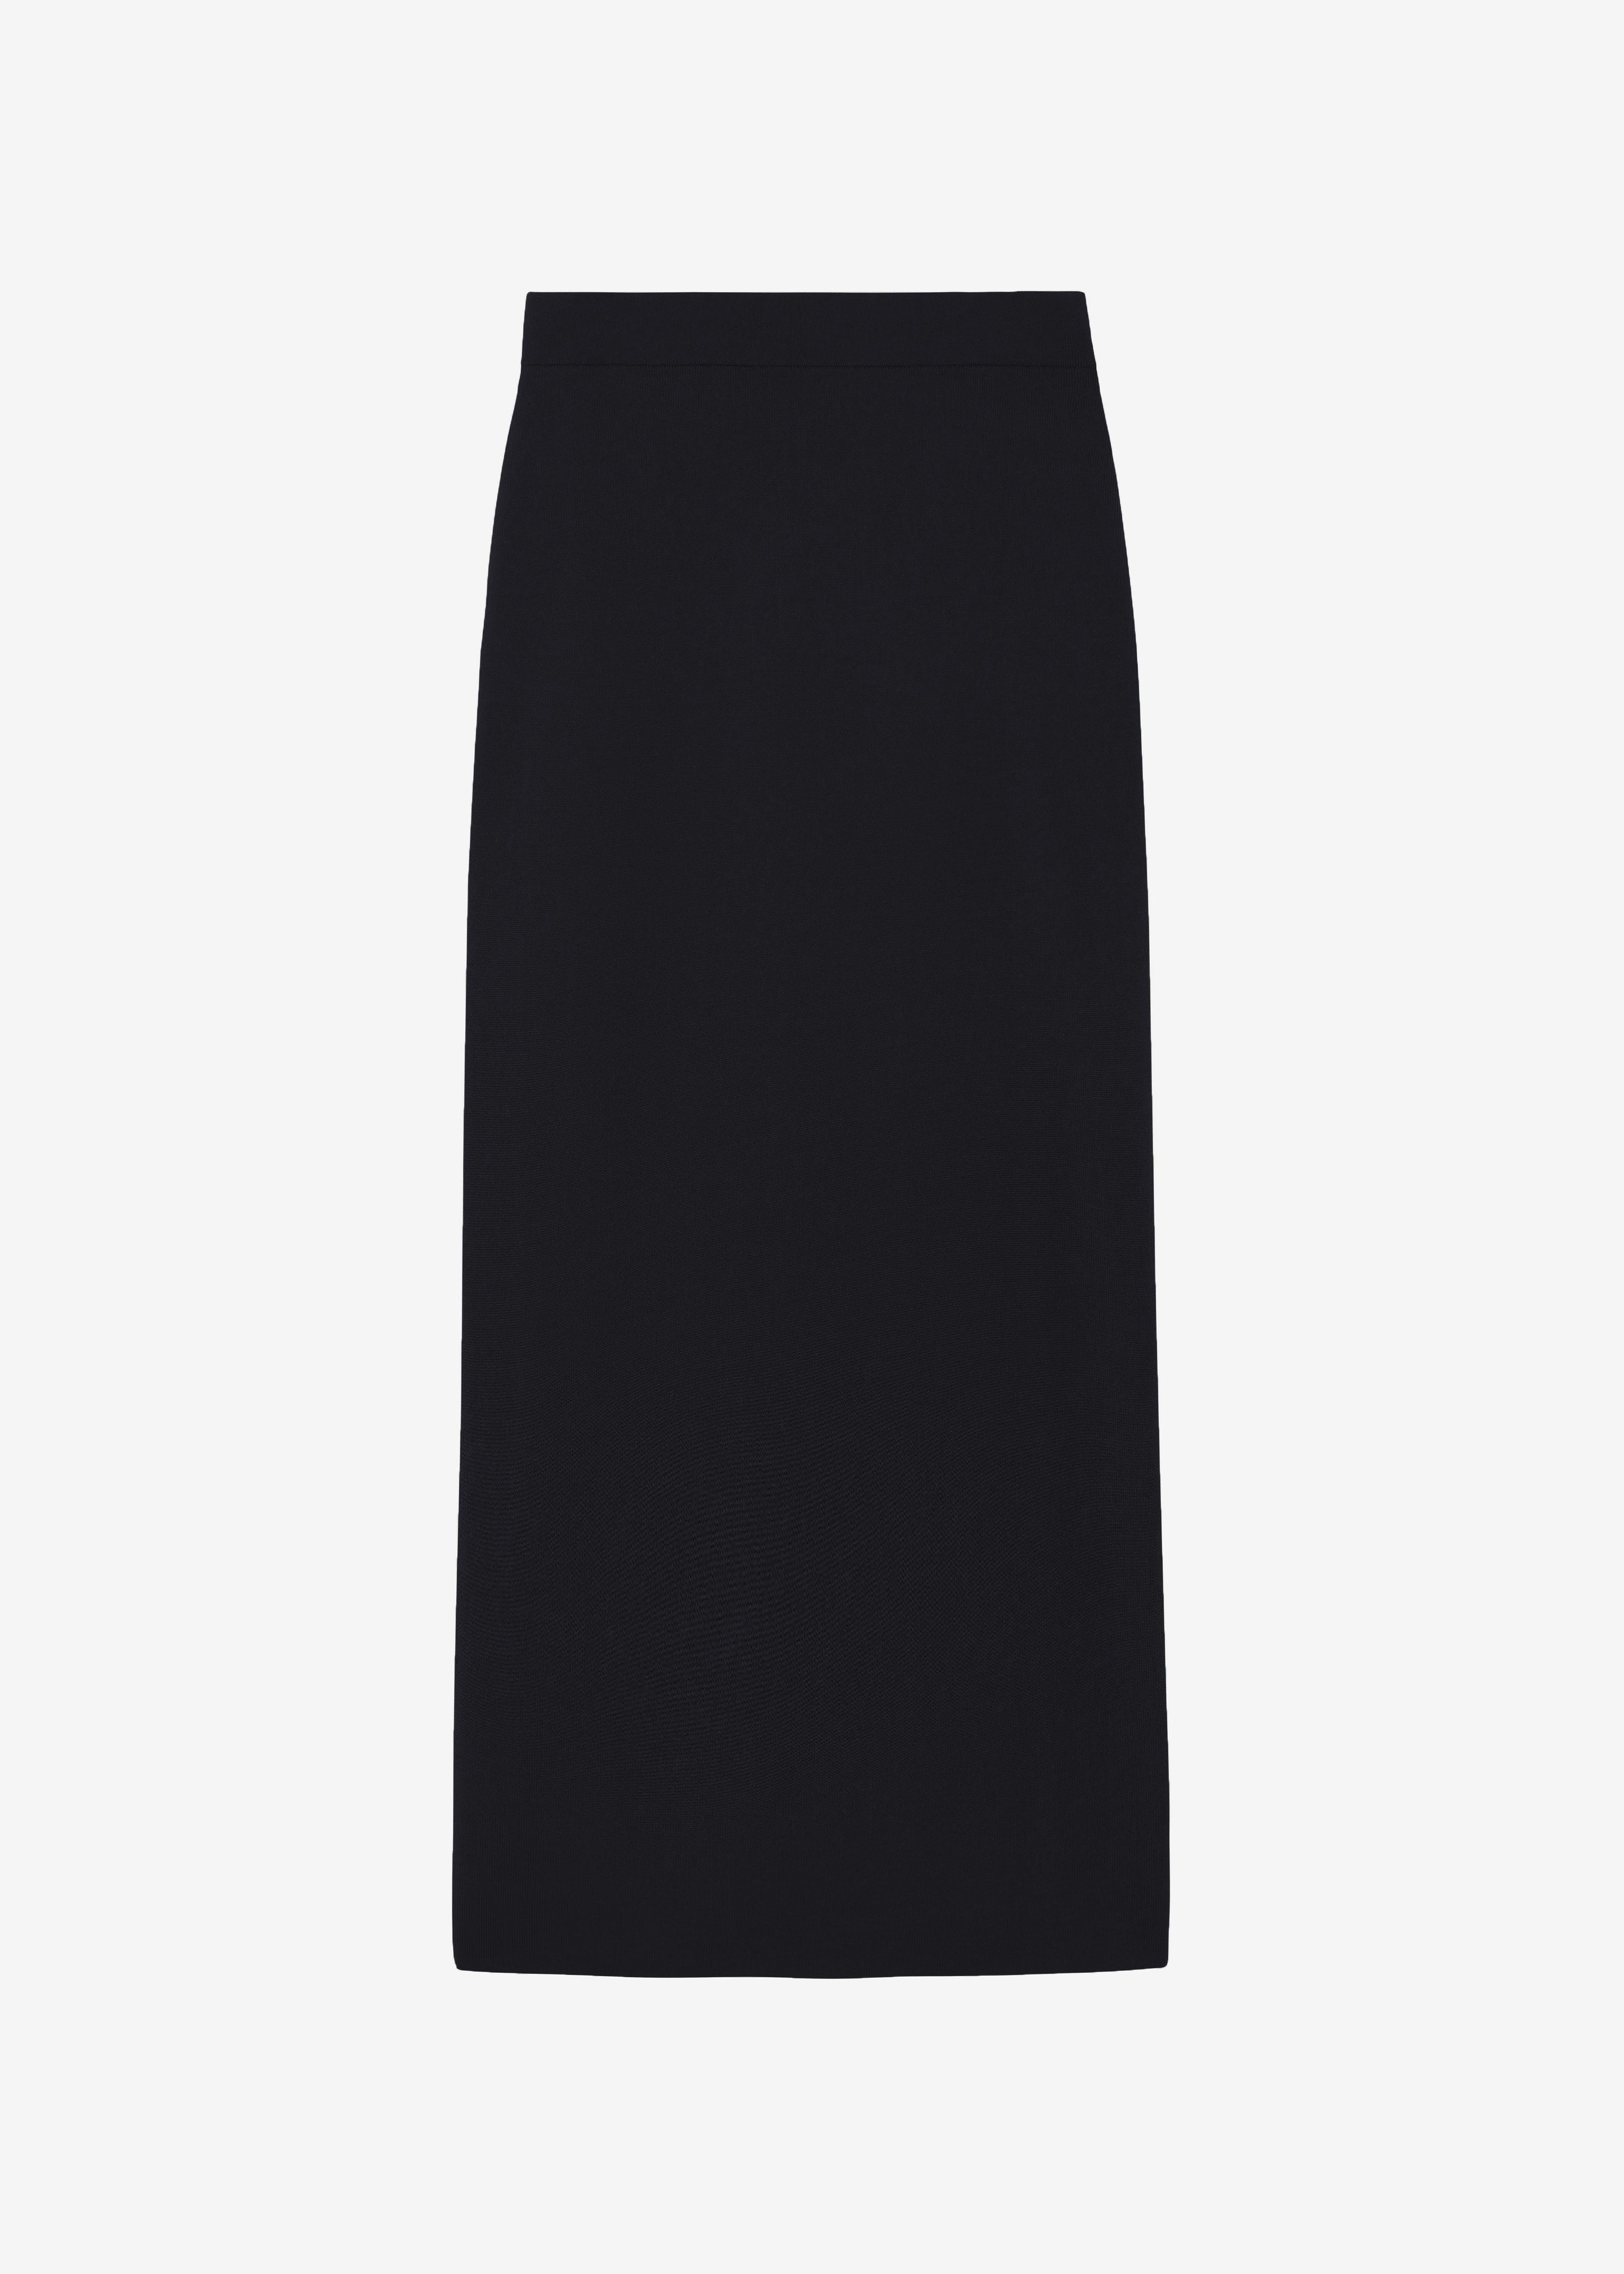 Solange Knit Pencil Skirt - Black - 11